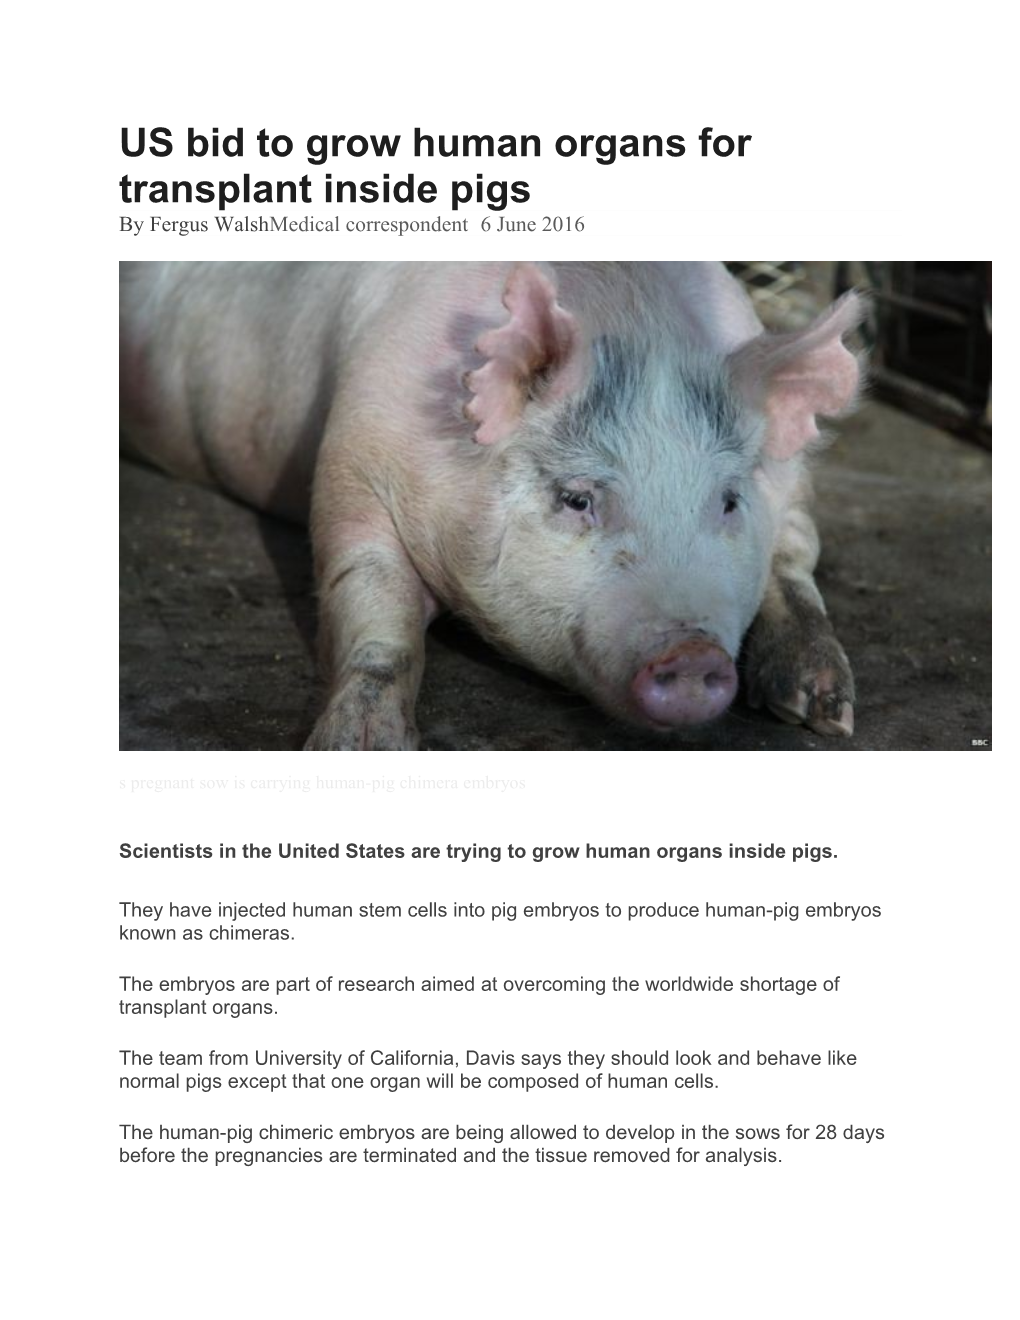 US Bid to Grow Human Organs for Transplant Inside Pigs